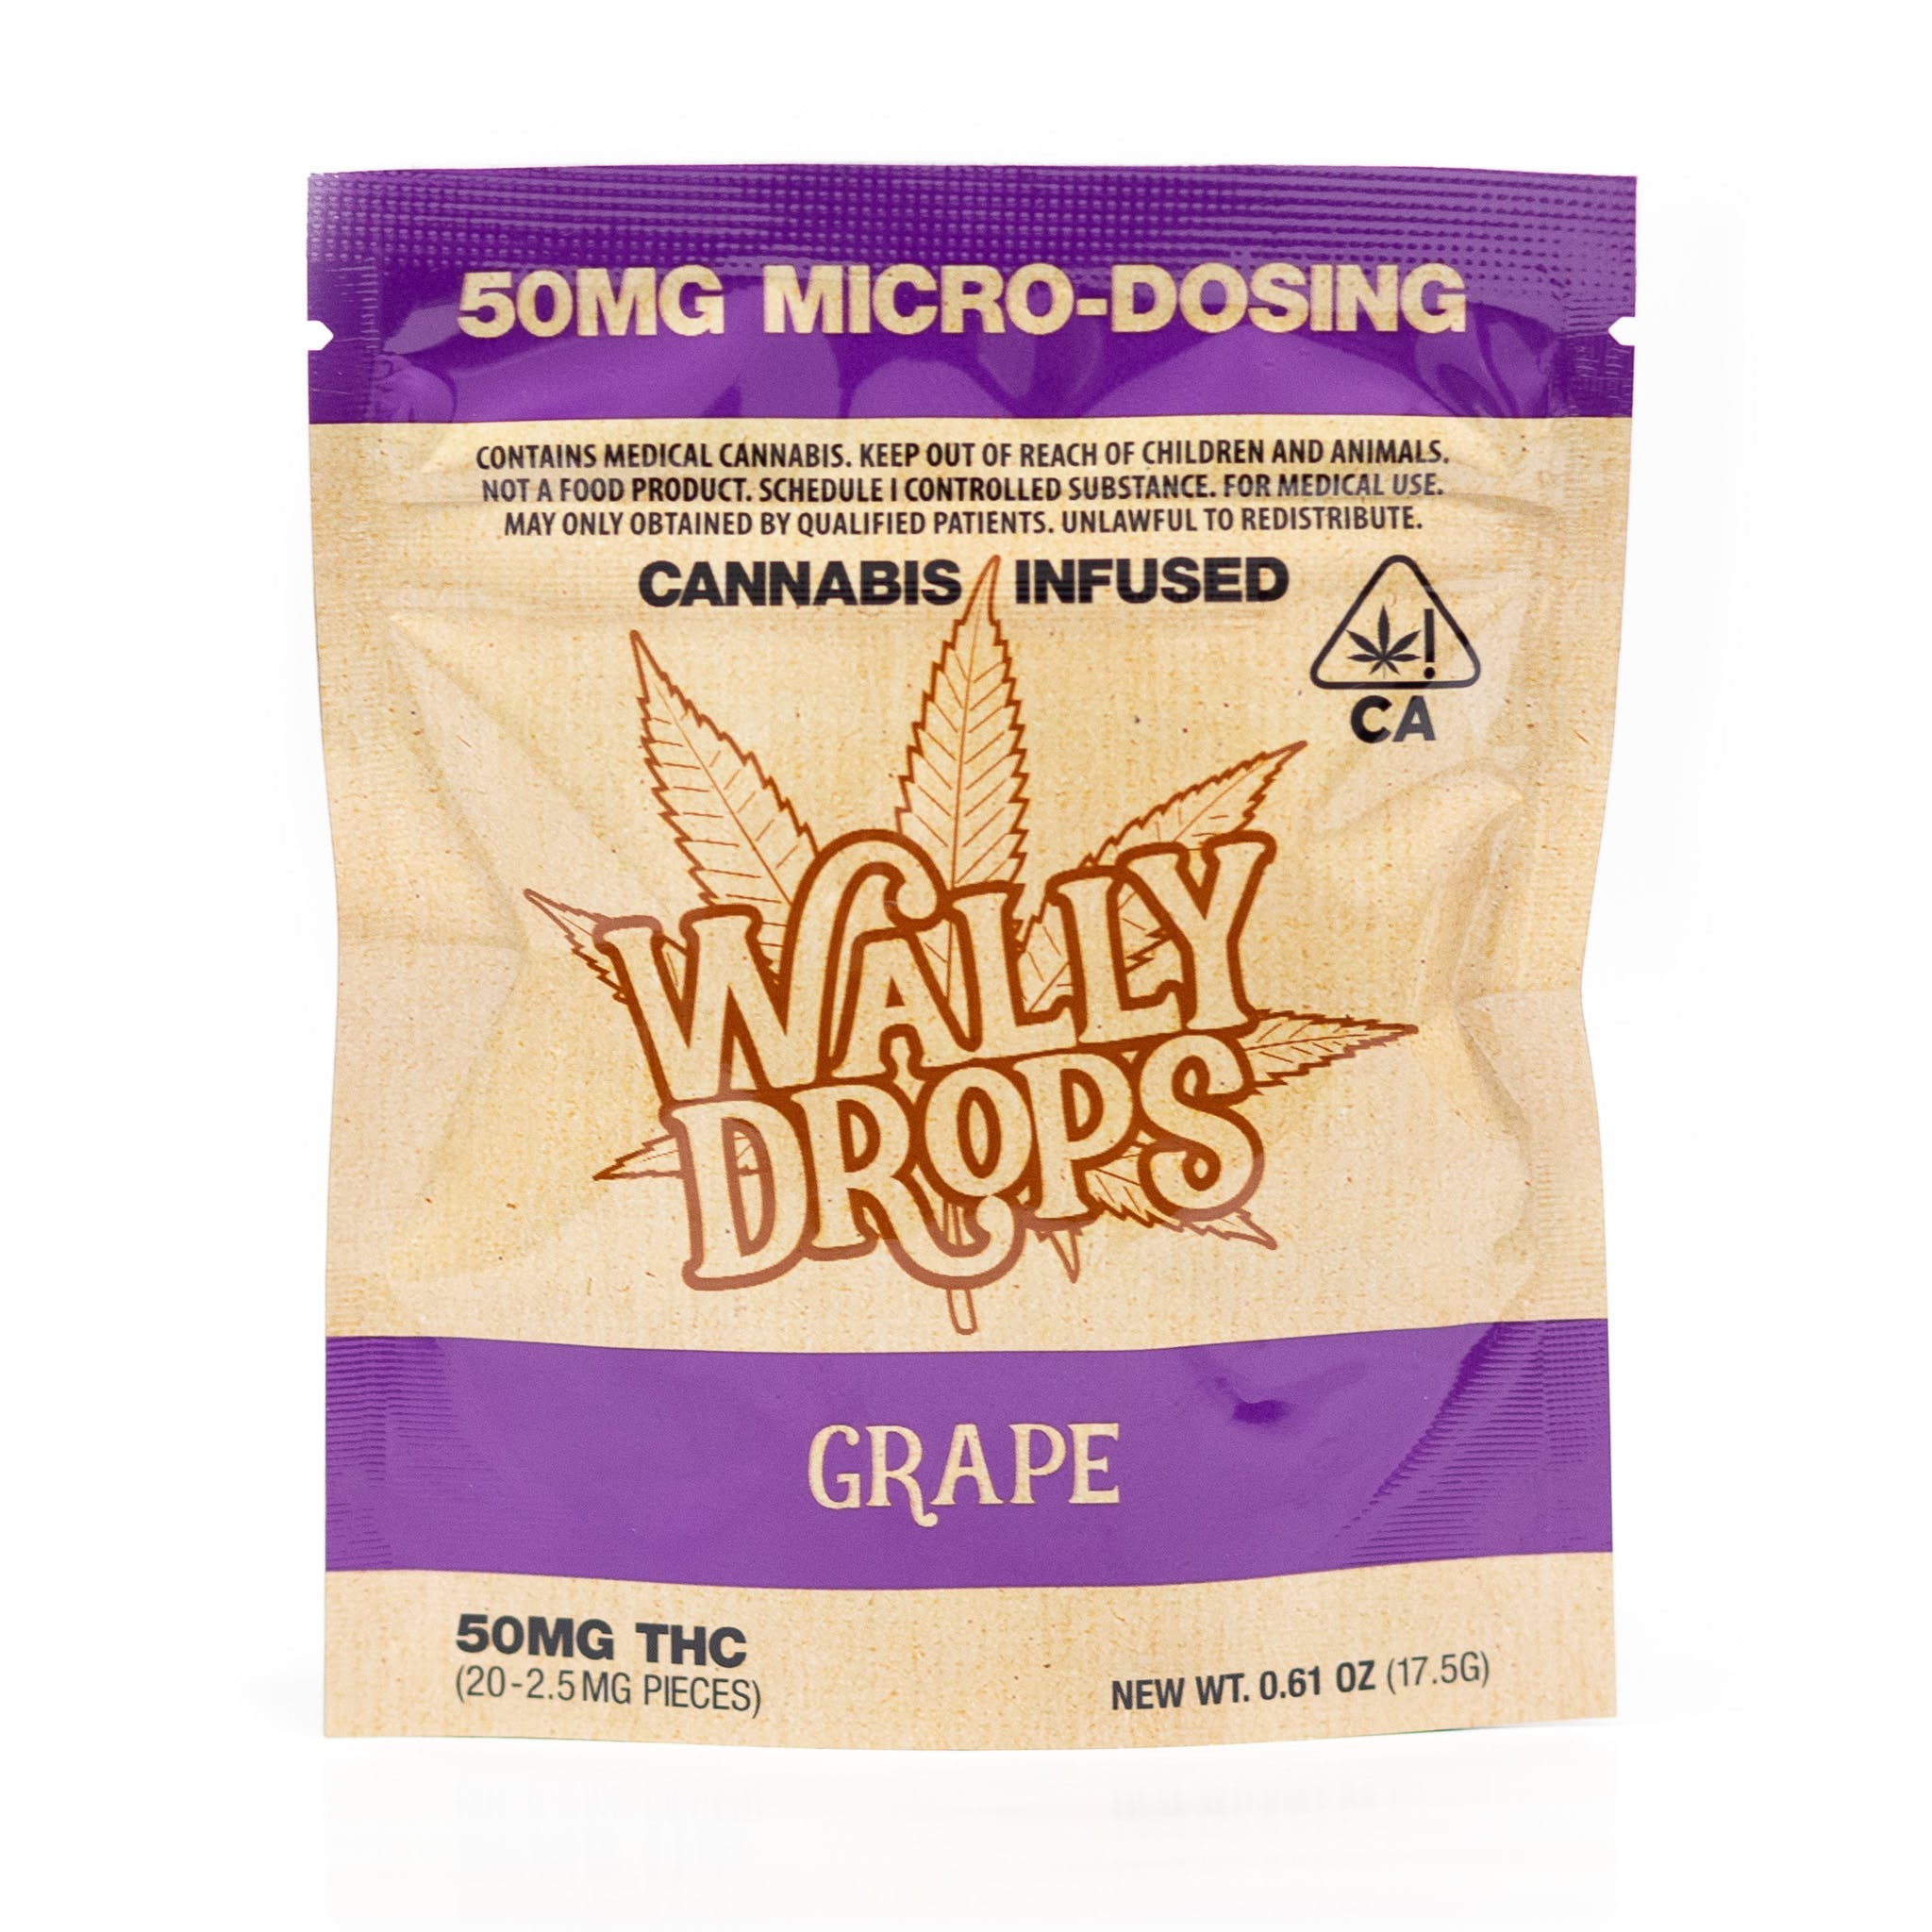 WALLY DROPS Grape 50mg